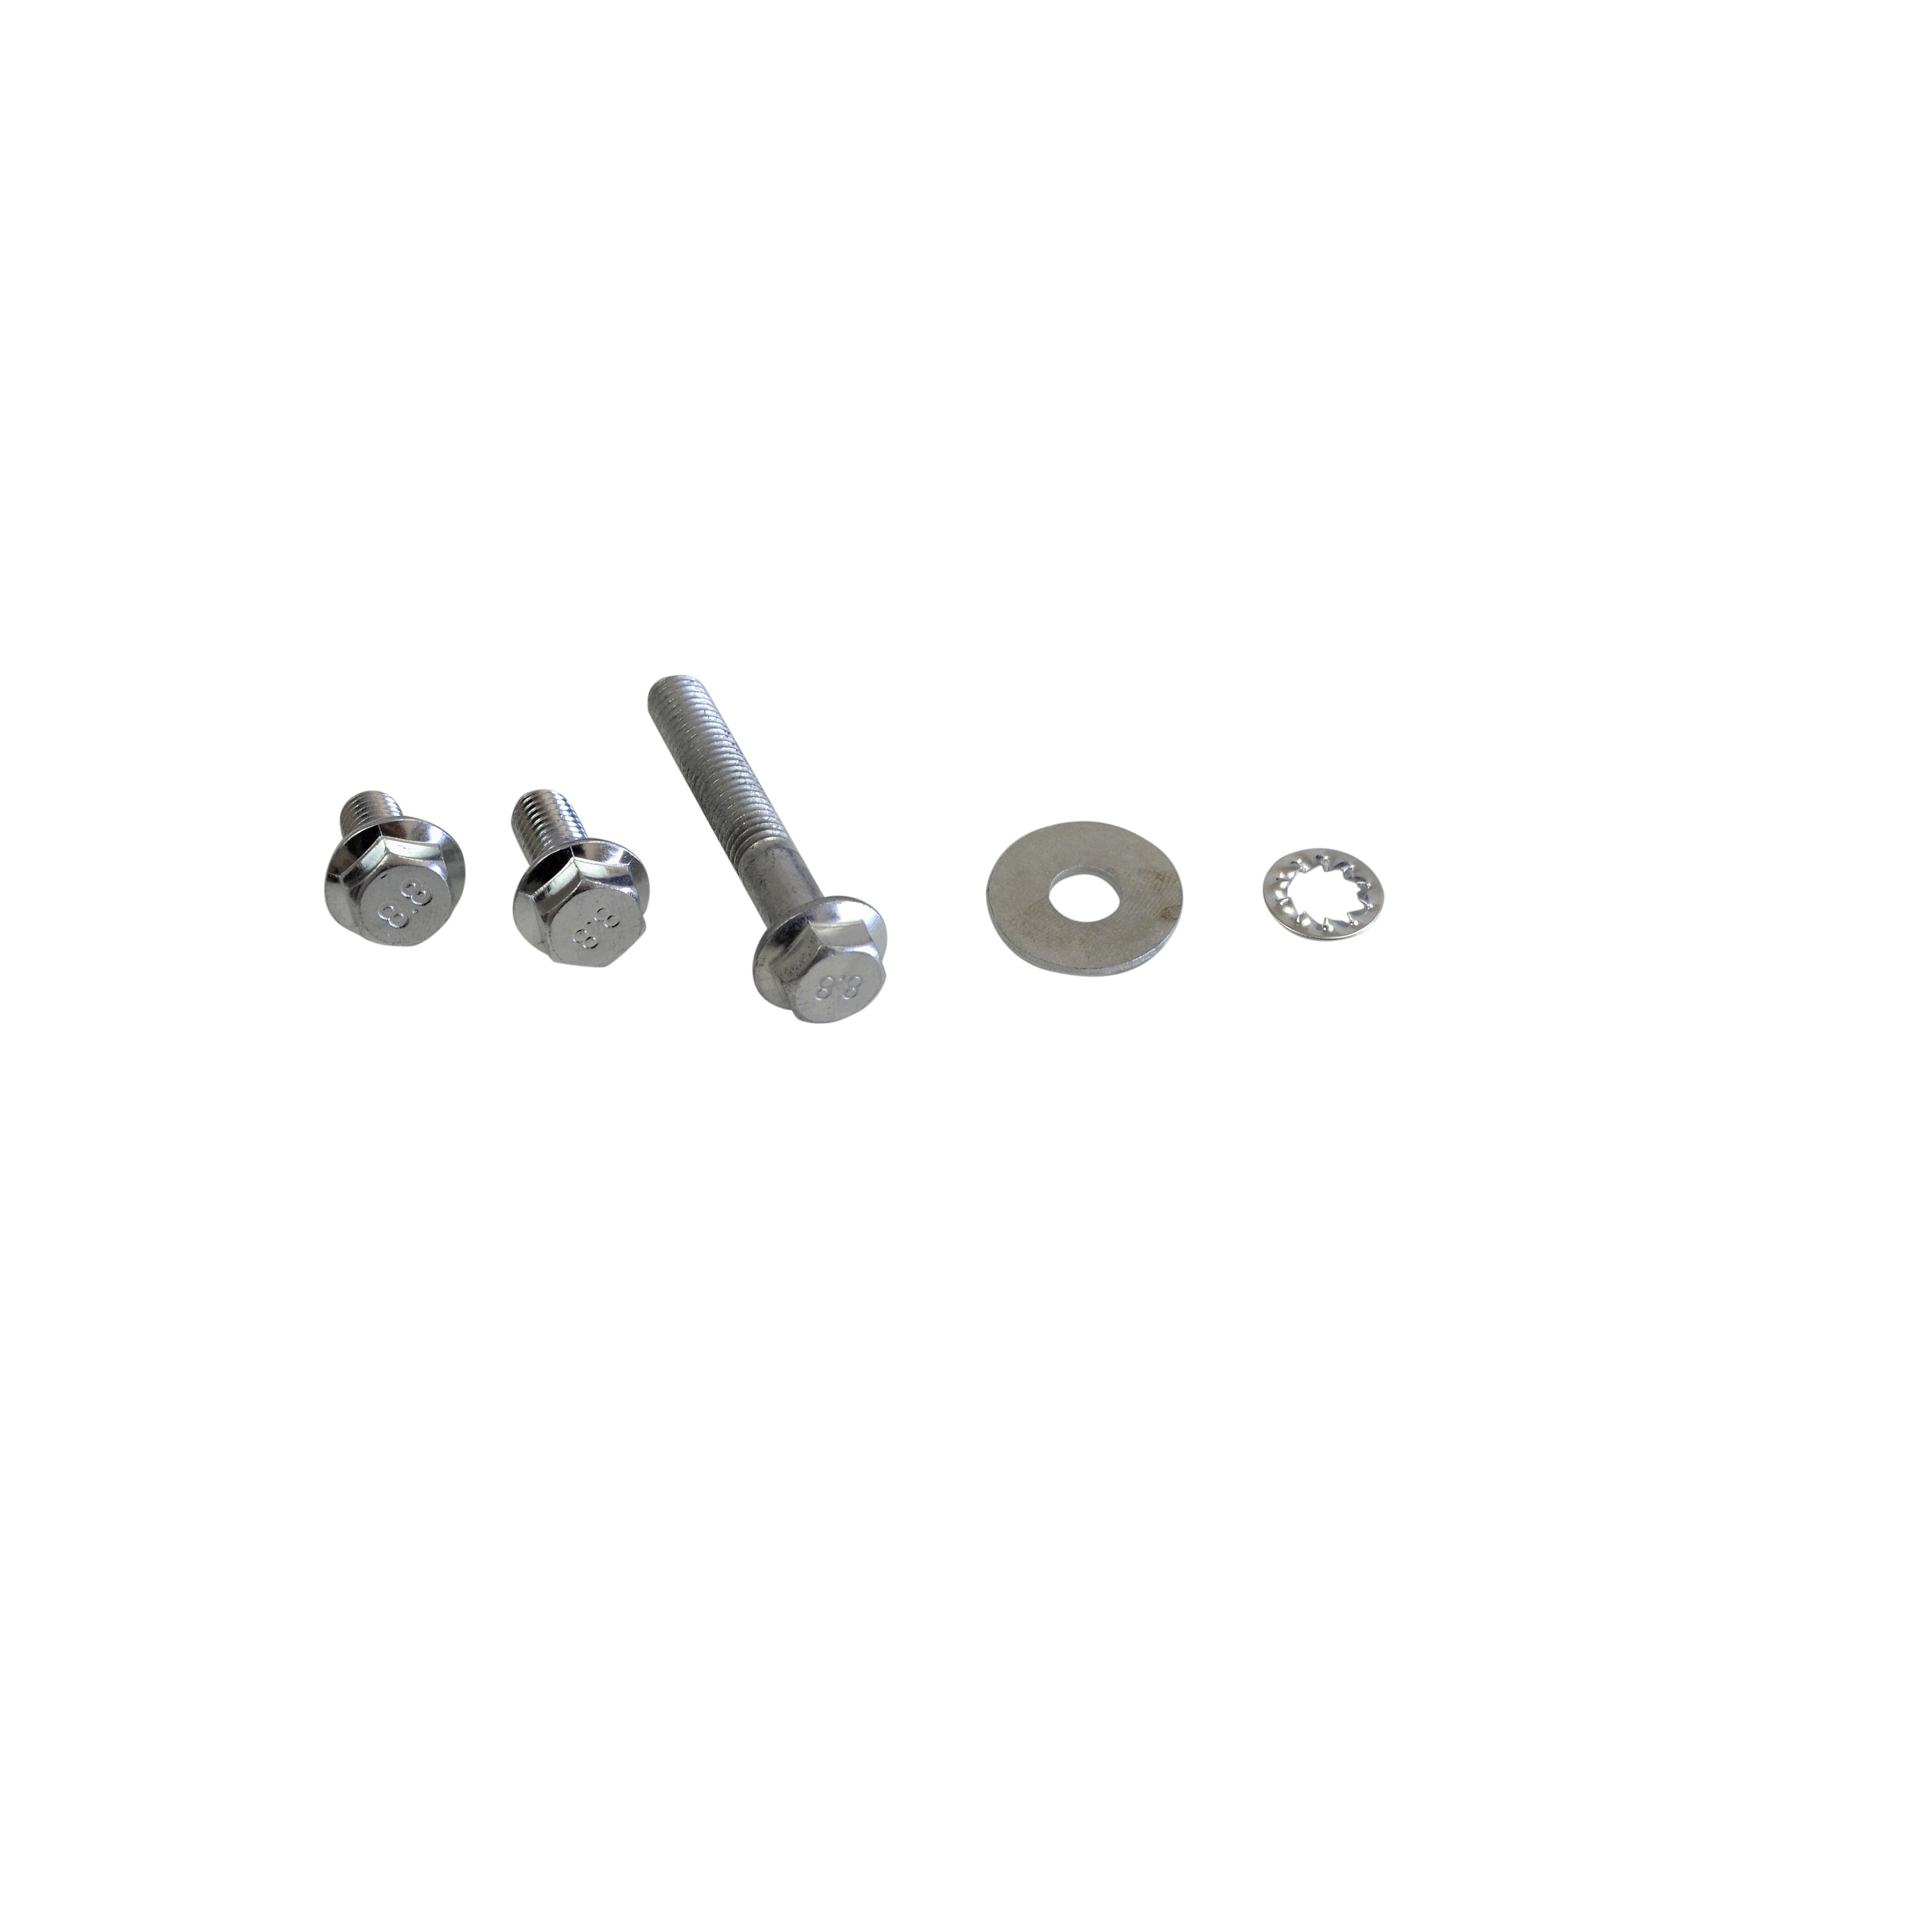 520 Pc Nut, Bolt, Washer Assortment Kit High Tensile Grade cap screw flange head grab kit M8 industrial fastners hardware 